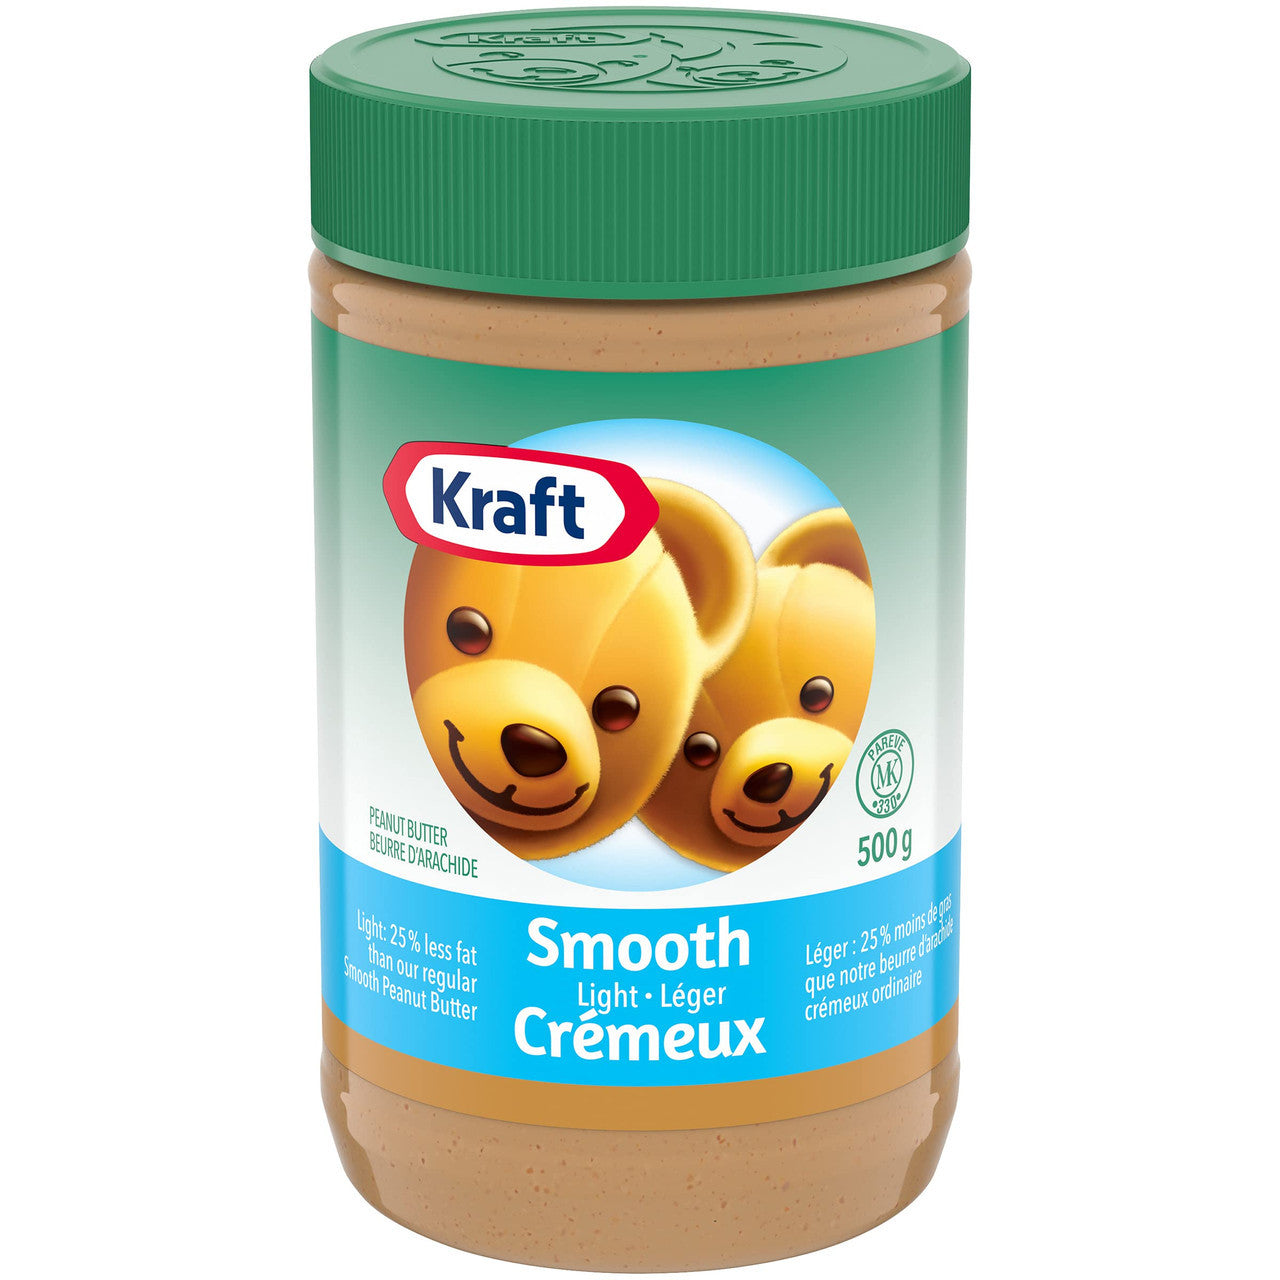 Kraft Smooth Light (25%less Fat) Peanut Butter 500g/17.6 oz.,{Canadian}